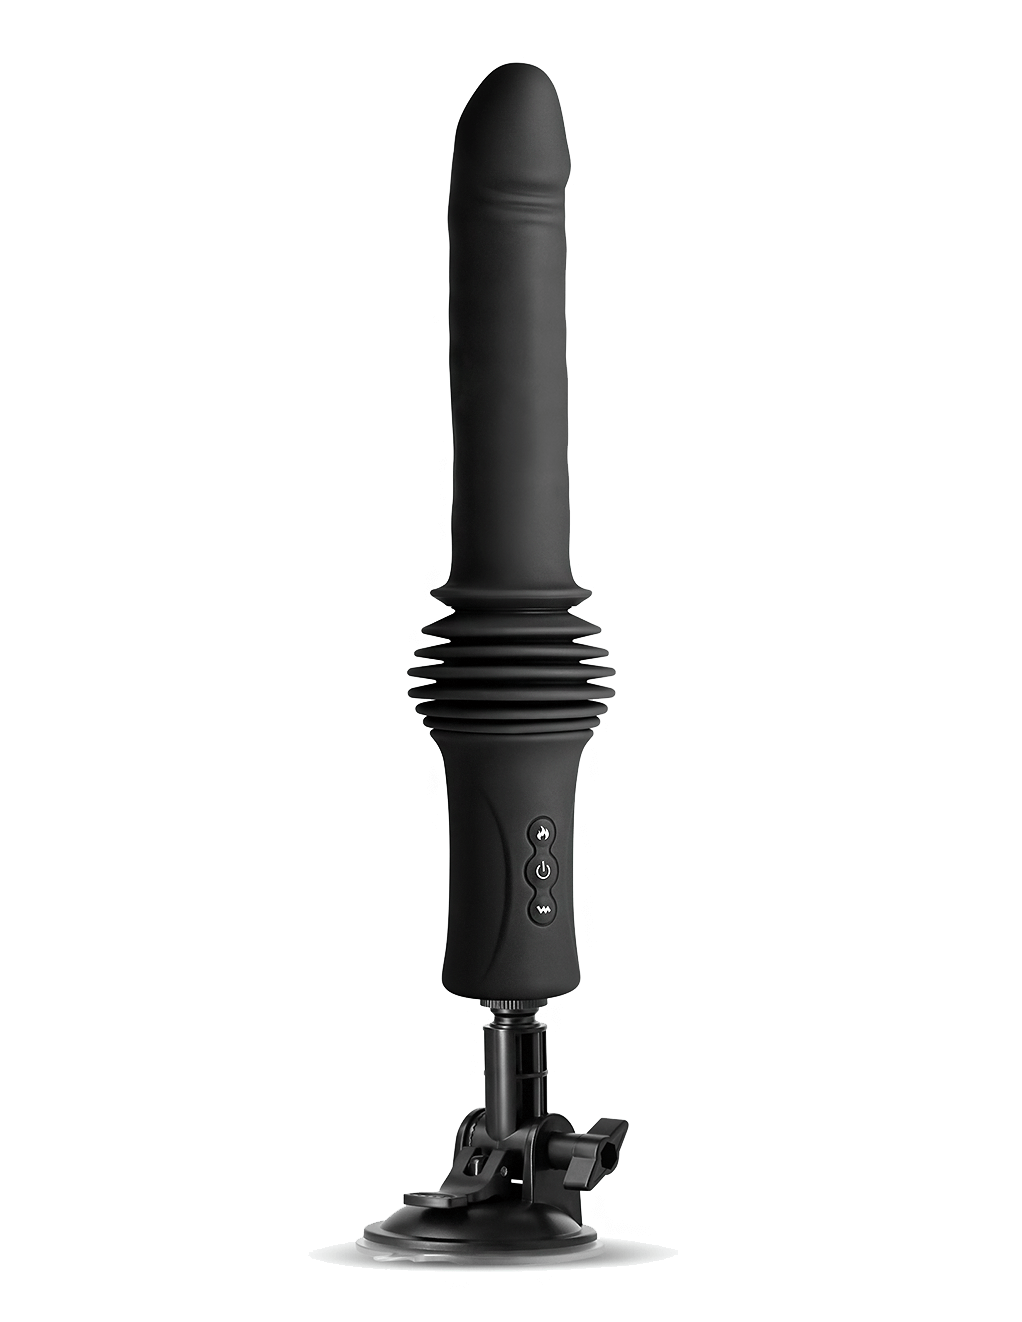 Renegade Super Stroker Thrusting Vibrator - Black - With Mount